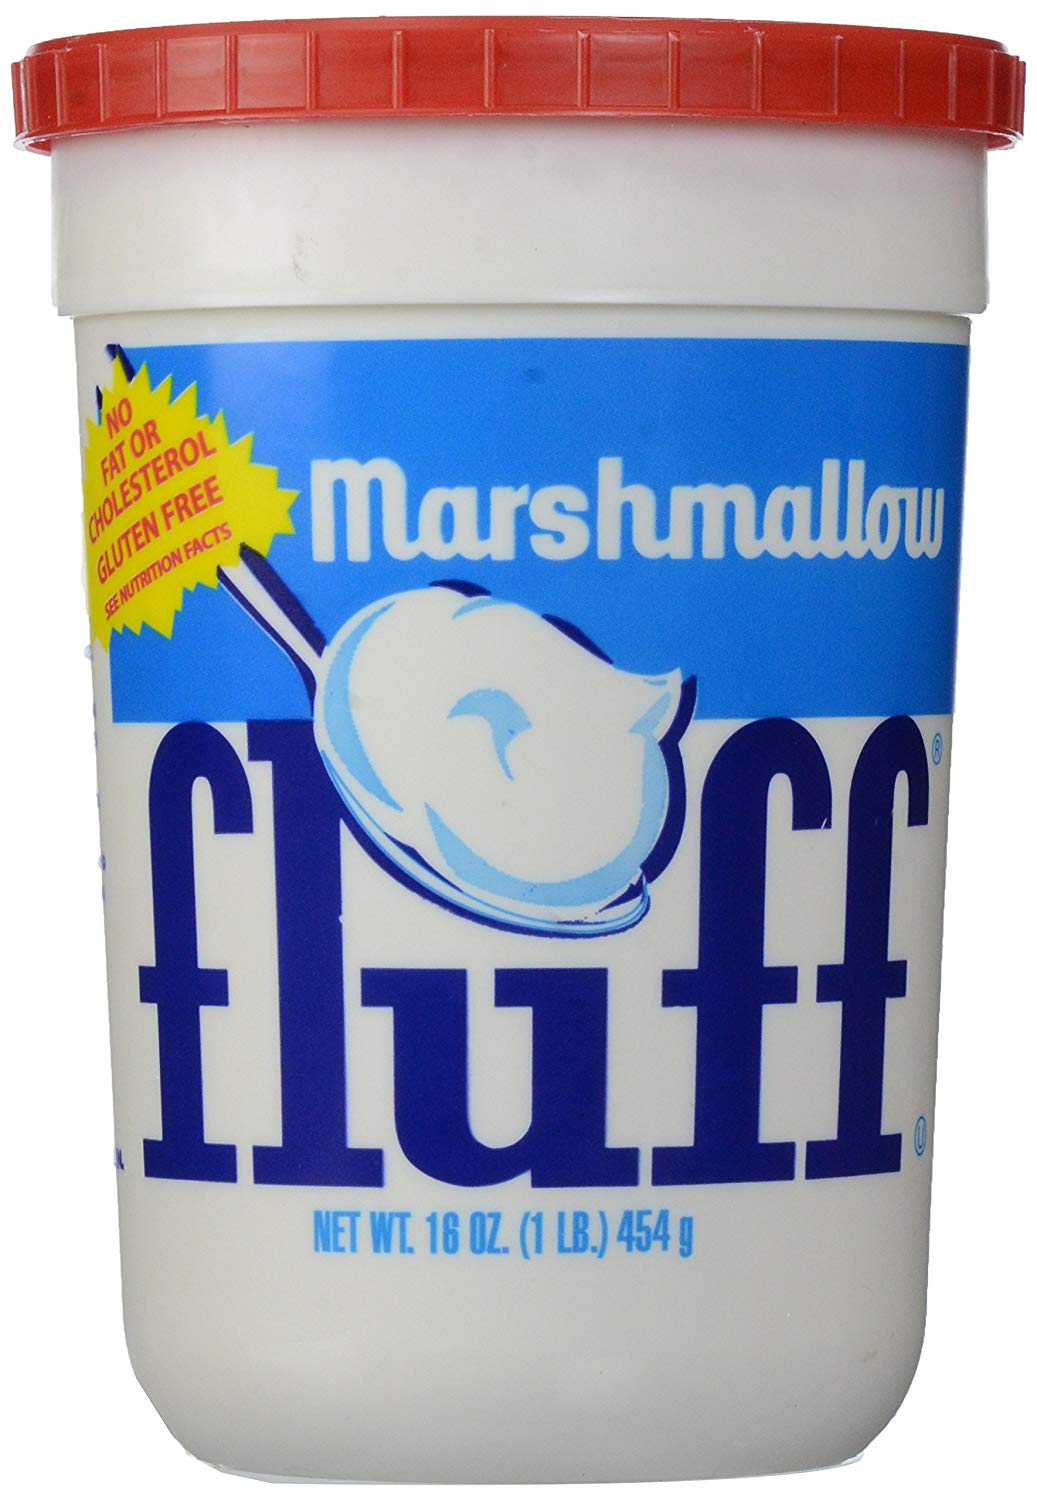 Marshmallow Fluff 16 oz